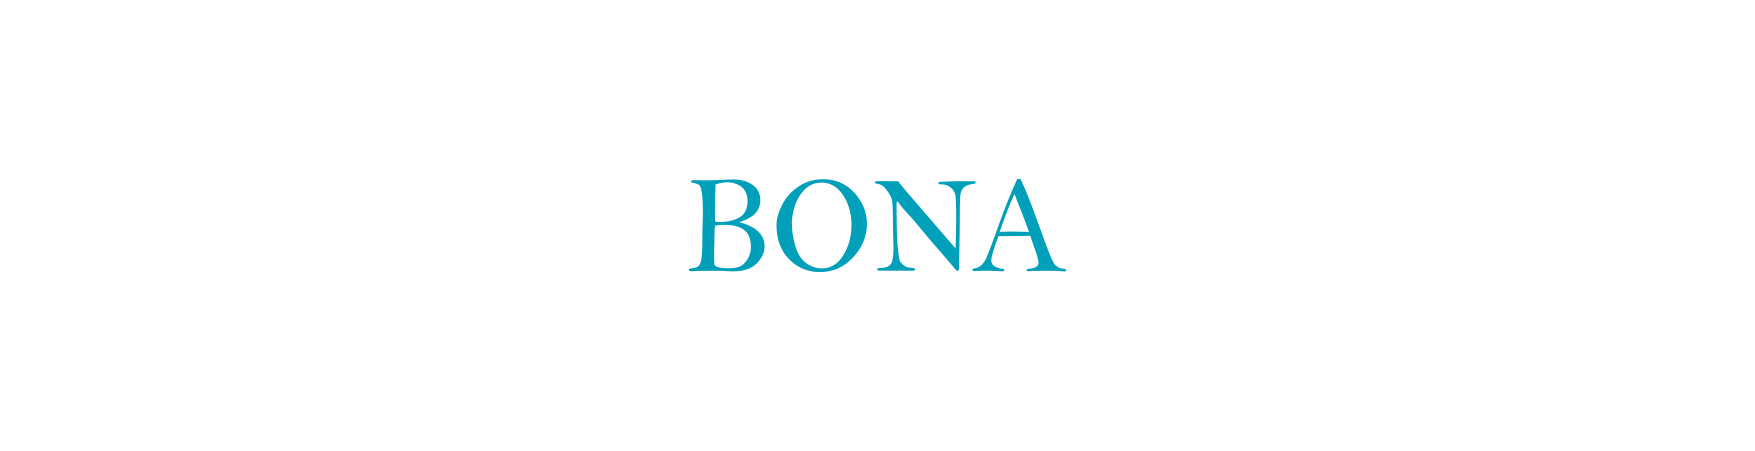 بونا